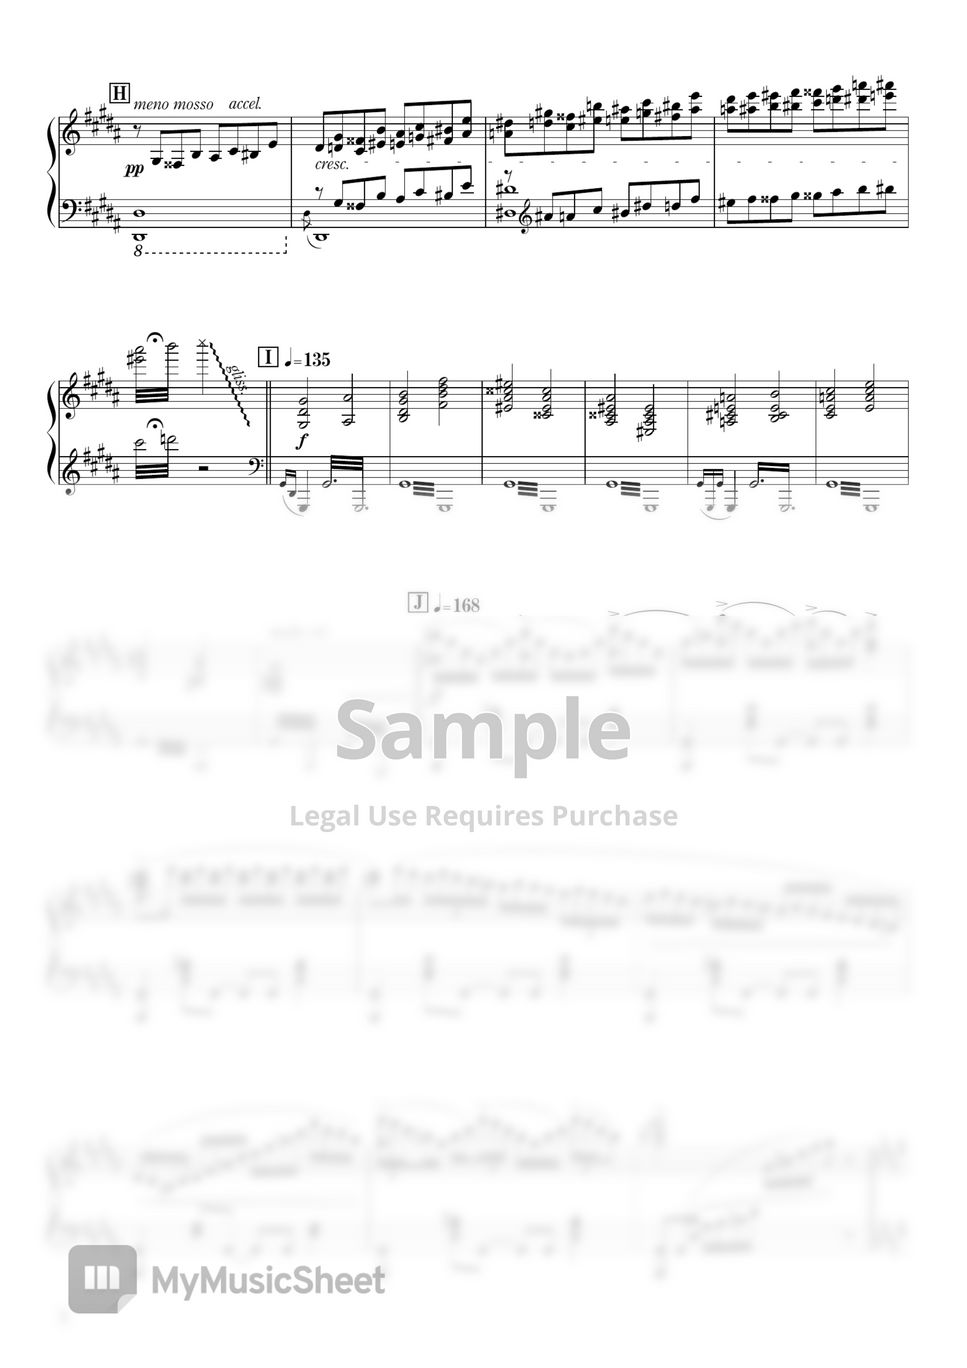 Traitor's Requiem - Jojo's Bizarre Adventure OP 9 Sheet music for Piano  (Solo)